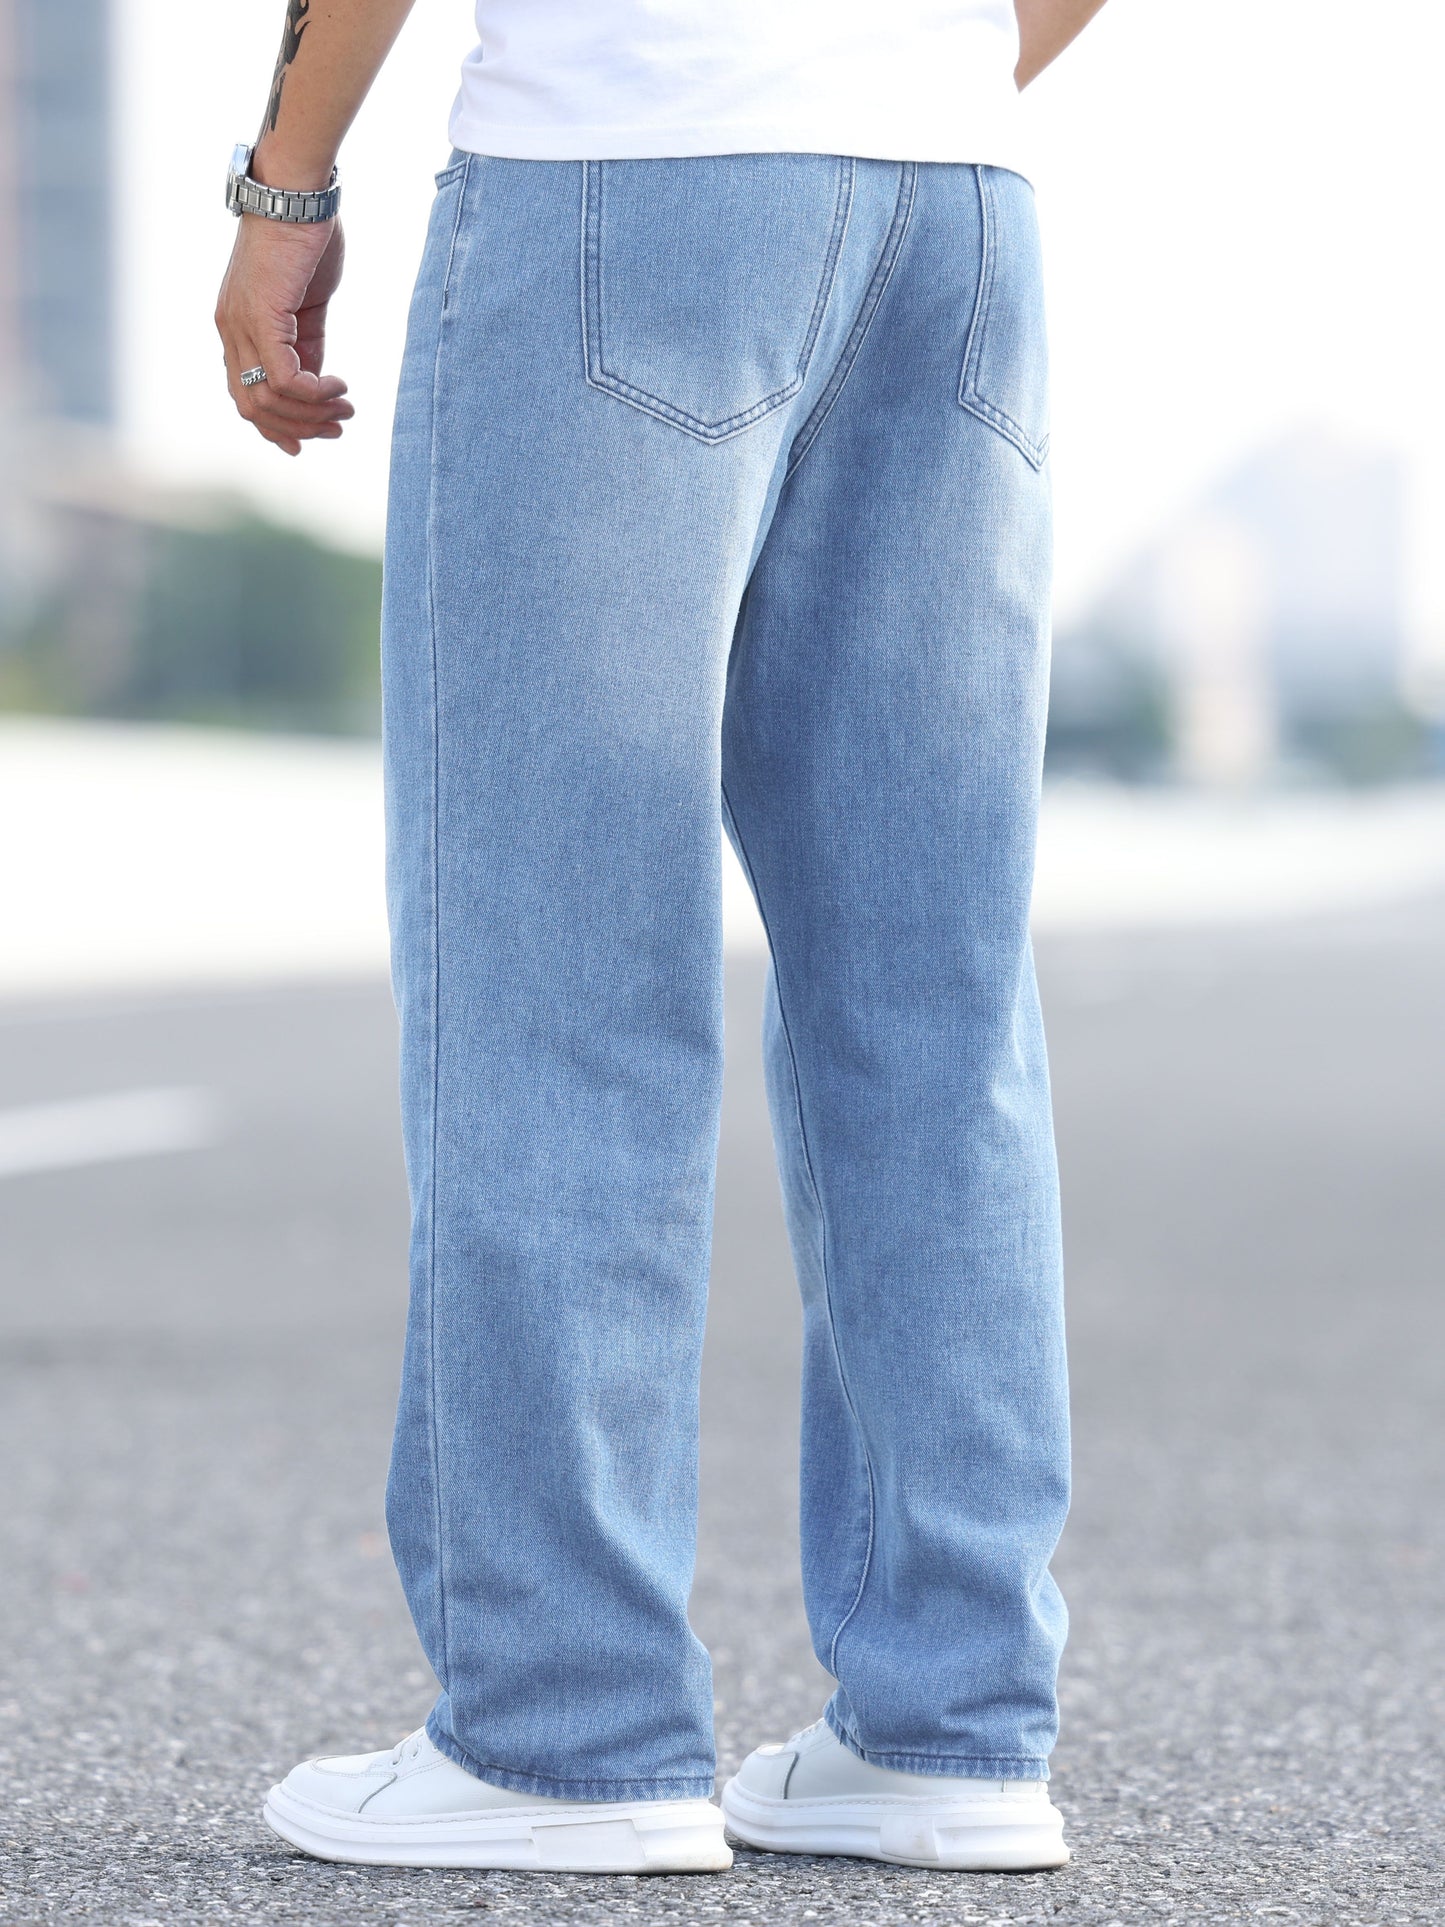 Classic Design Cotton Blend Distressed Jeans, Men's Casual Drawstring Regular Fit Denim Pants For All Seasons